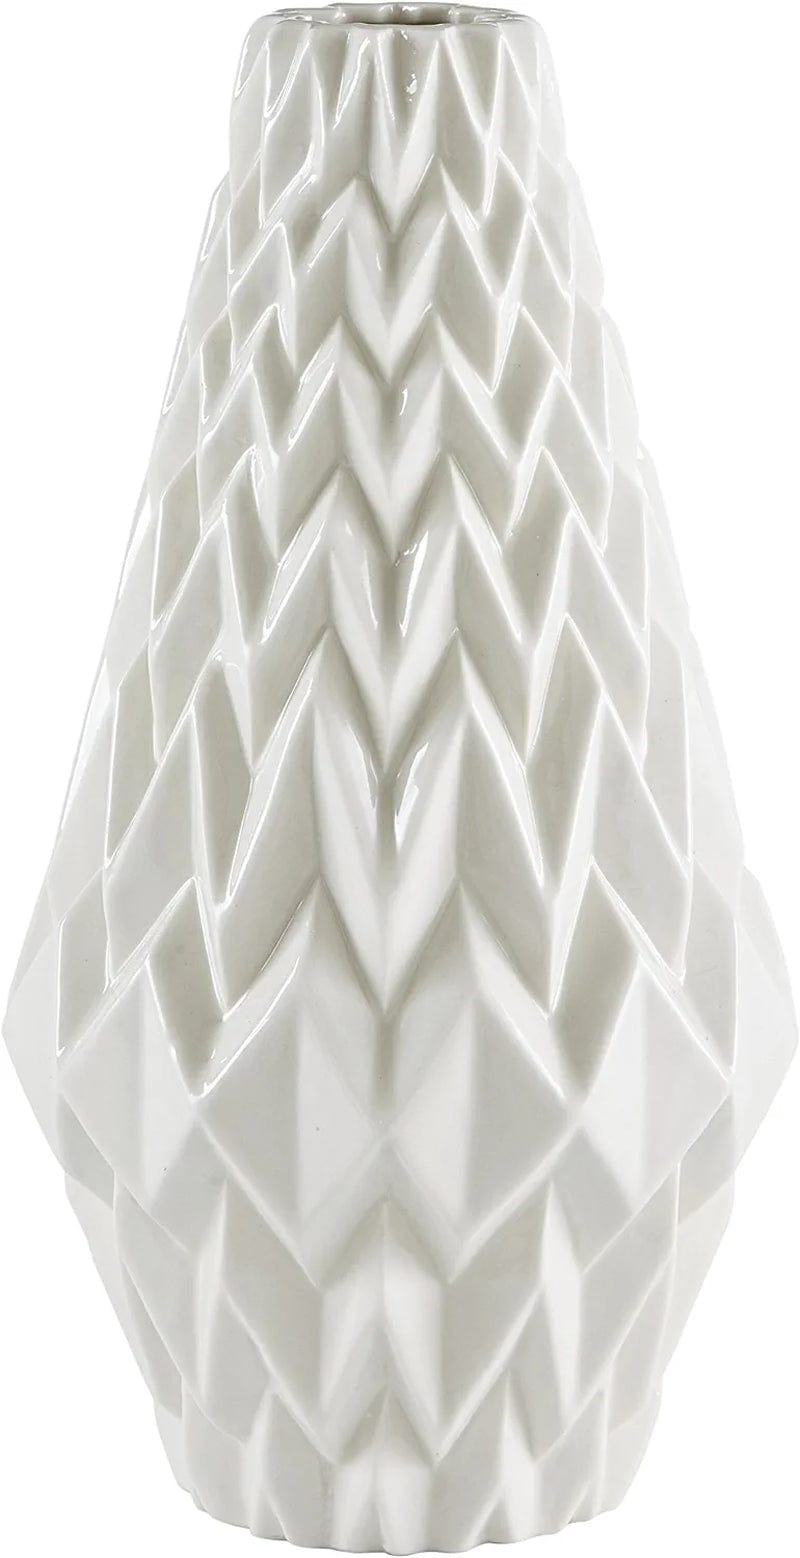 Brand – Rivet Modern Geometric Pattern Decorative Stoneware Vase, Large Centerpiece, 12.25"H, White